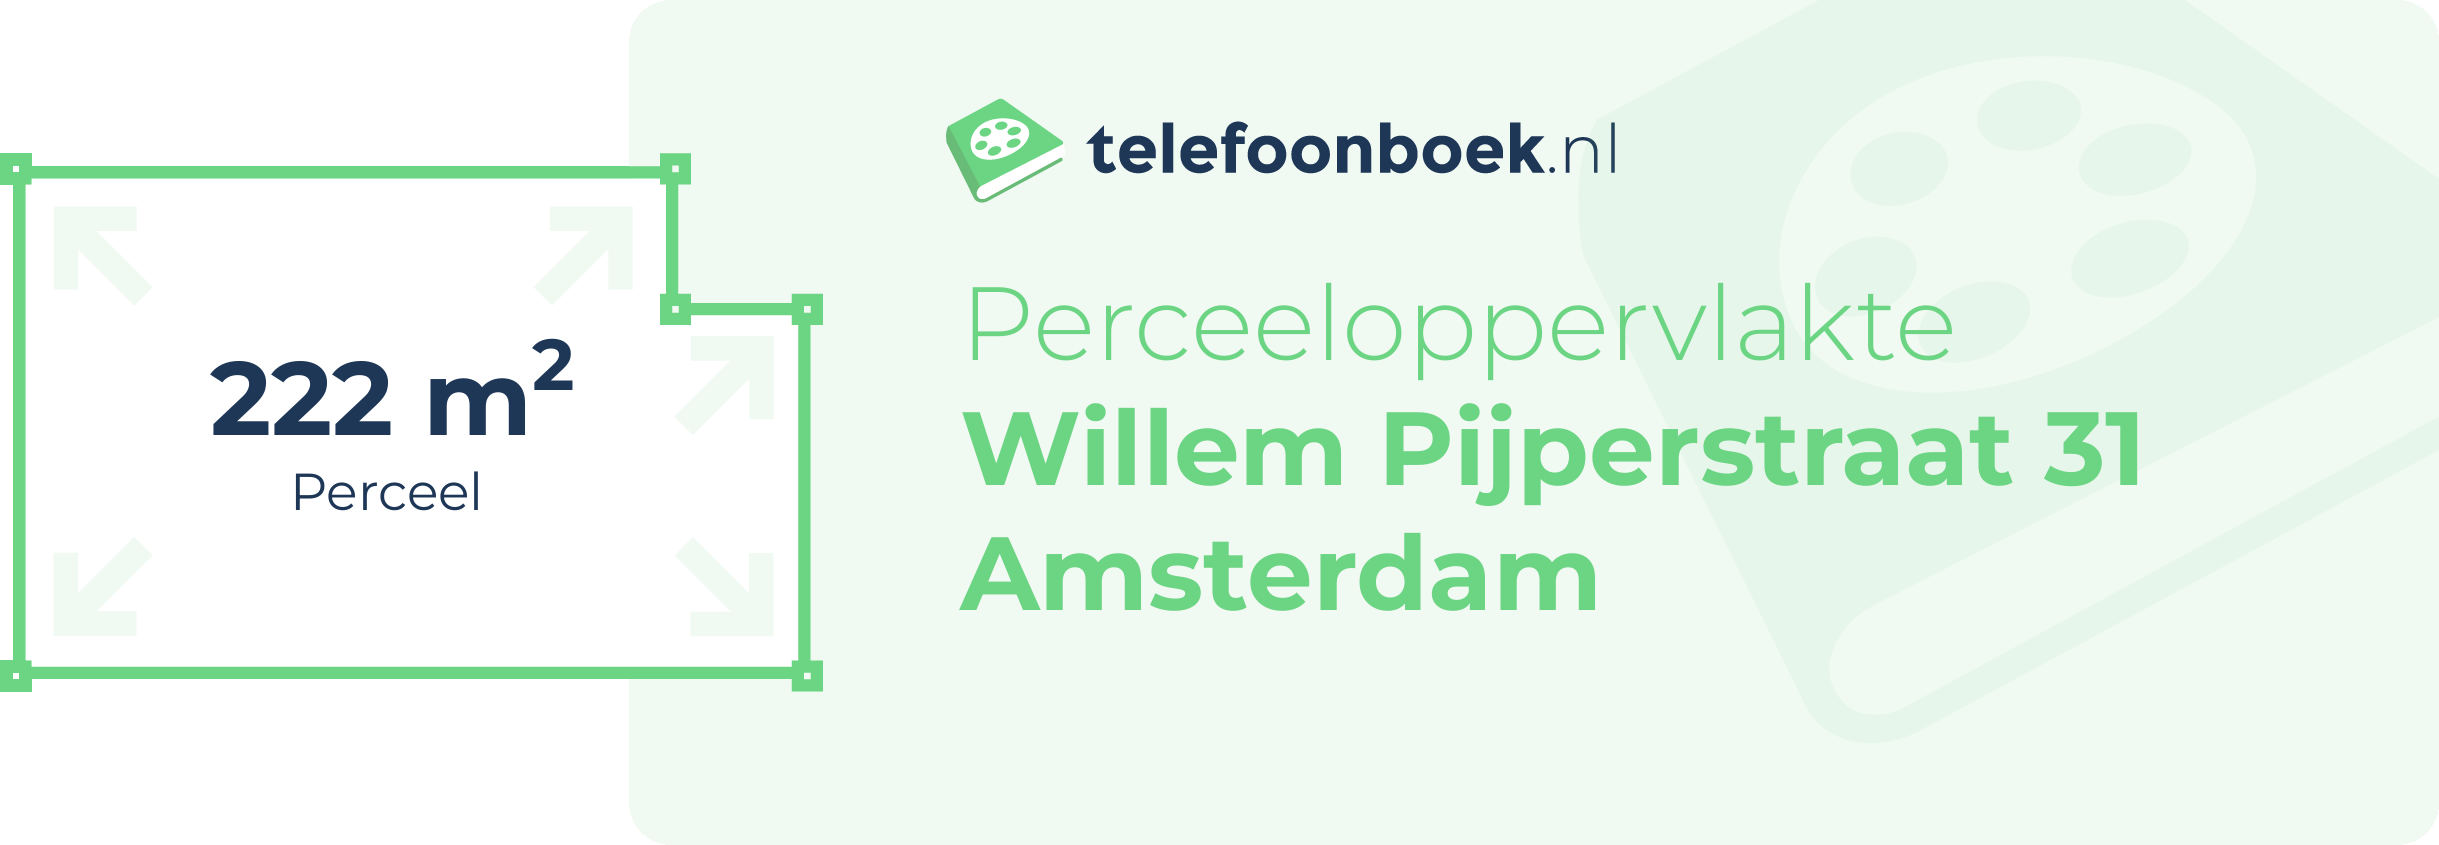 Perceeloppervlakte Willem Pijperstraat 31 Amsterdam